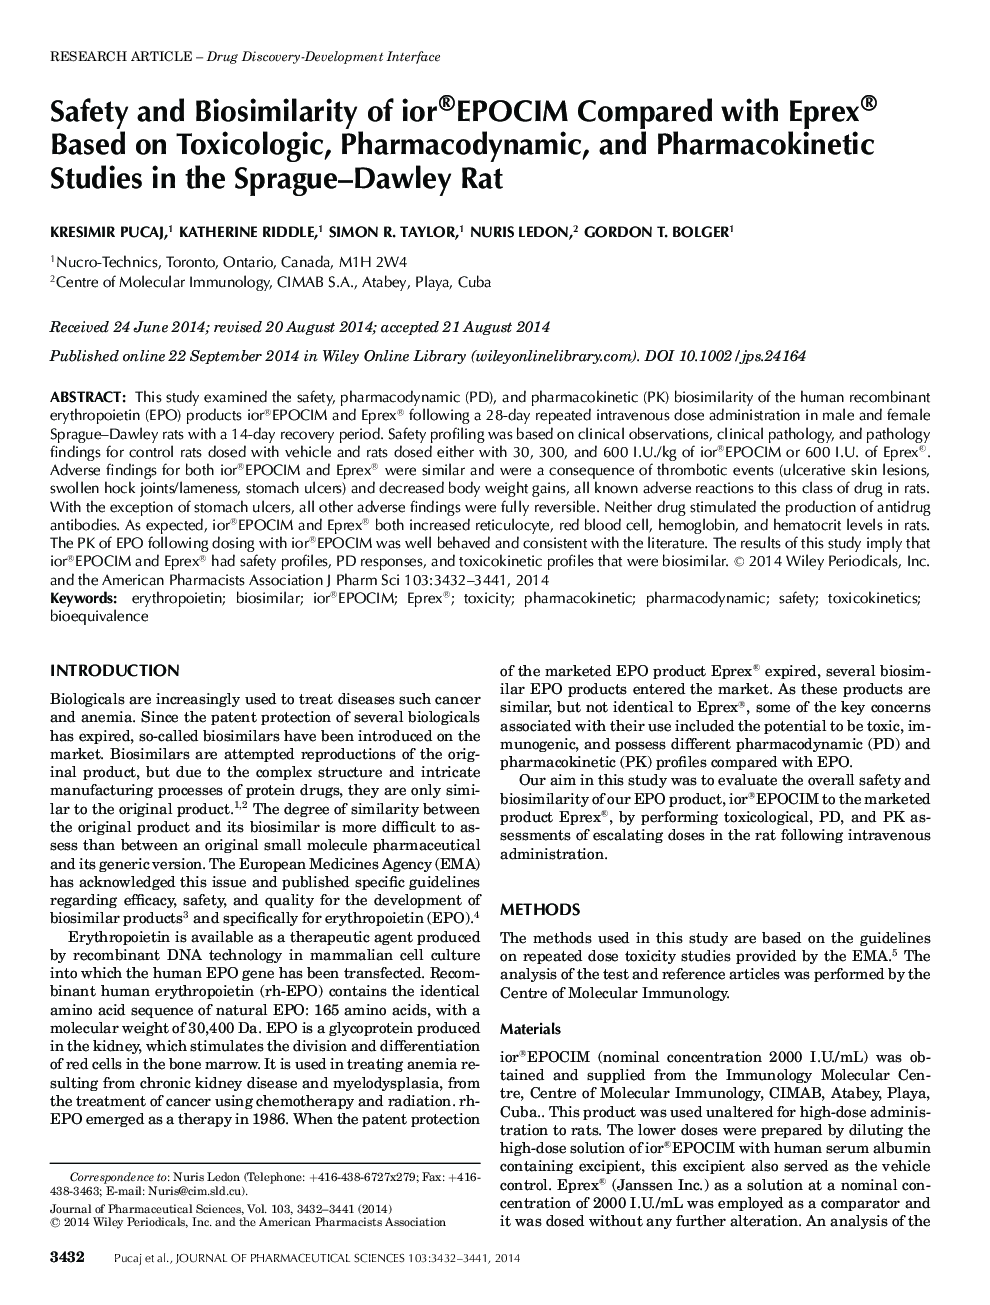 Safety and Biosimilarity of ior®EPOCIM Compared with Eprex® Based on Toxicologic, Pharmacodynamic, and Pharmacokinetic Studies in the Sprague-Dawley Rat